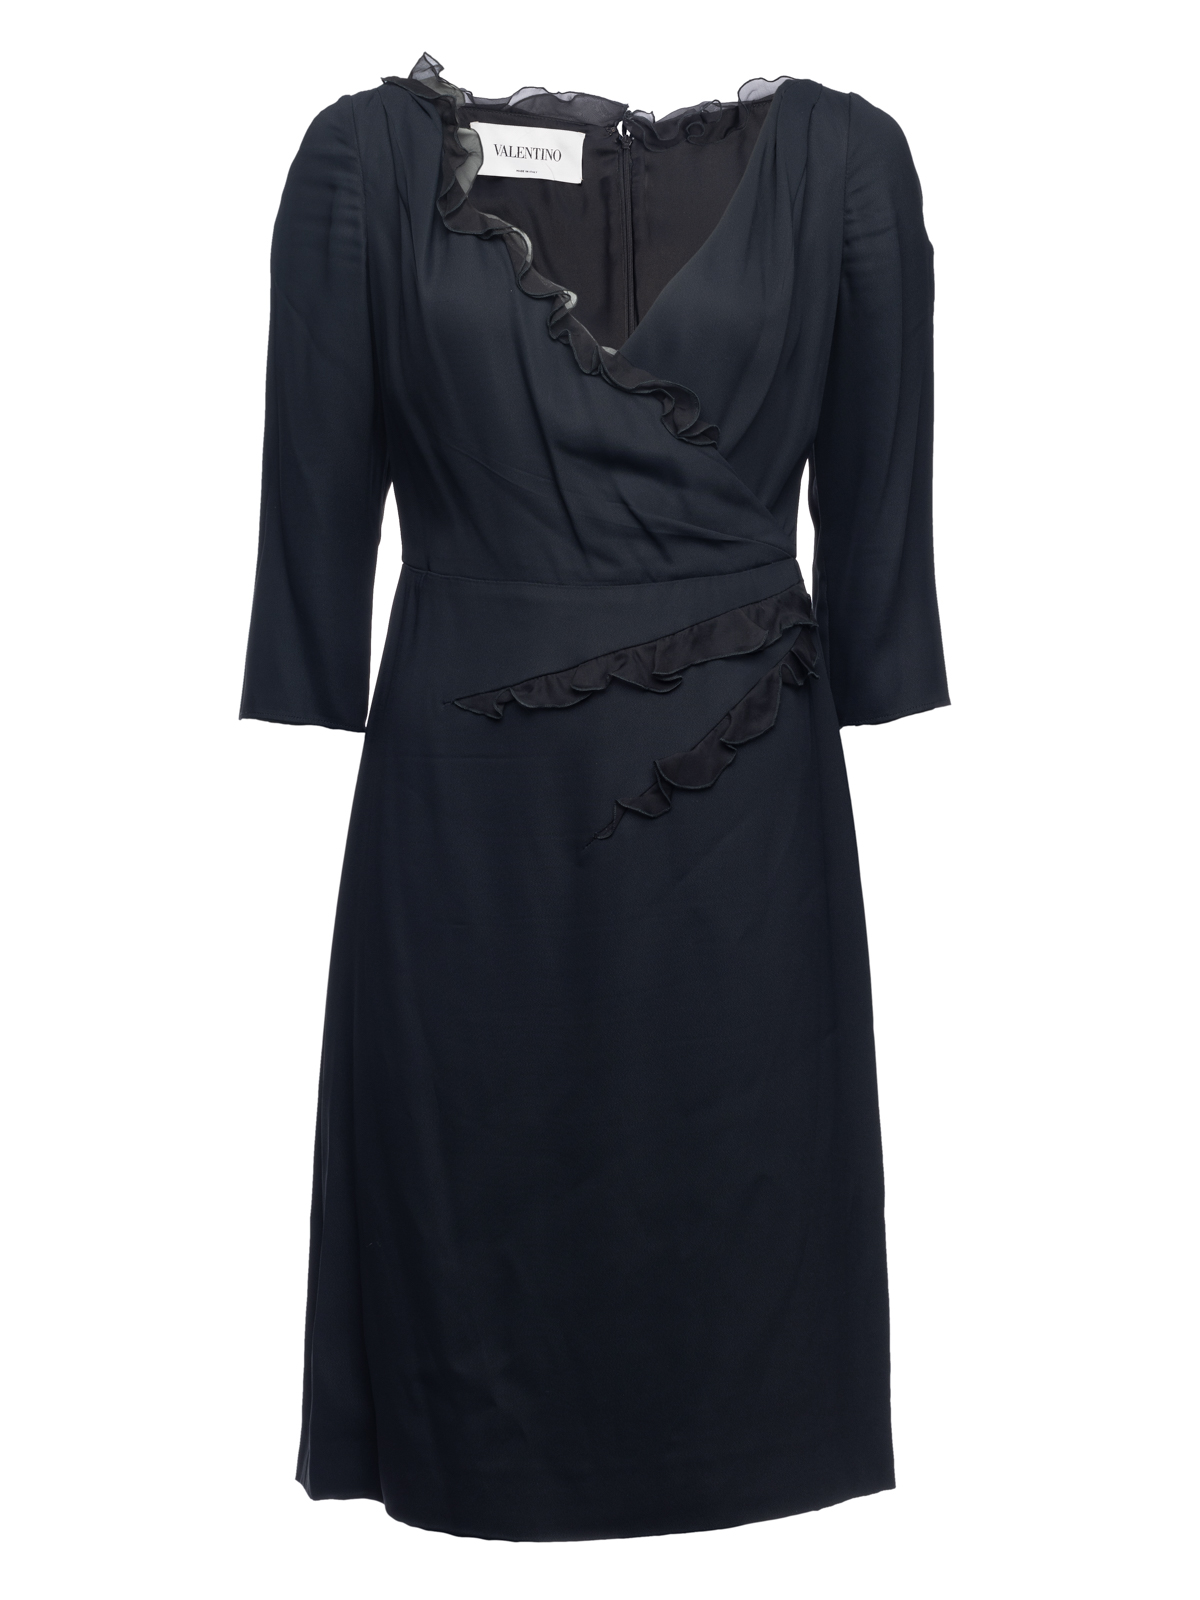 Valentino Garavani Black 3/4 Sleeve Frill Waist Dress